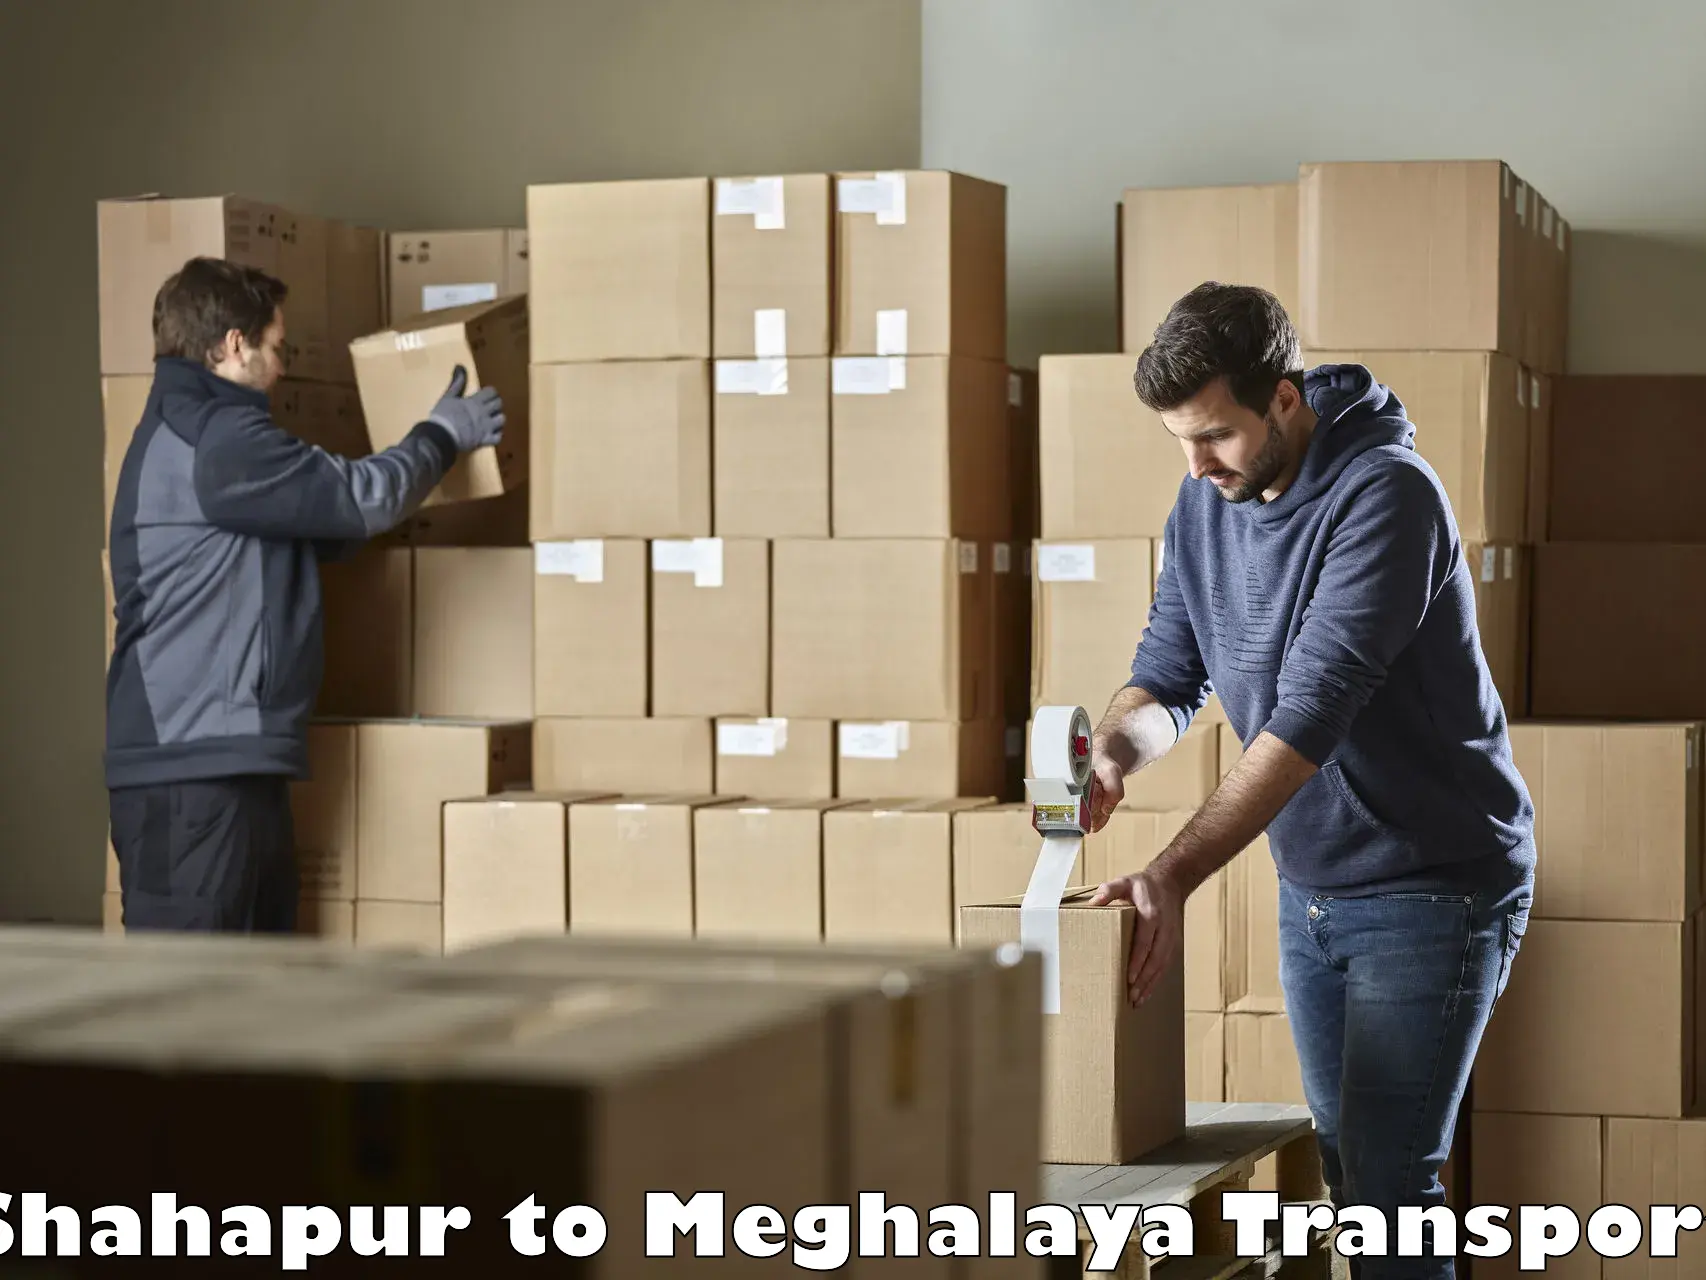 Truck transport companies in India Shahapur to Meghalaya